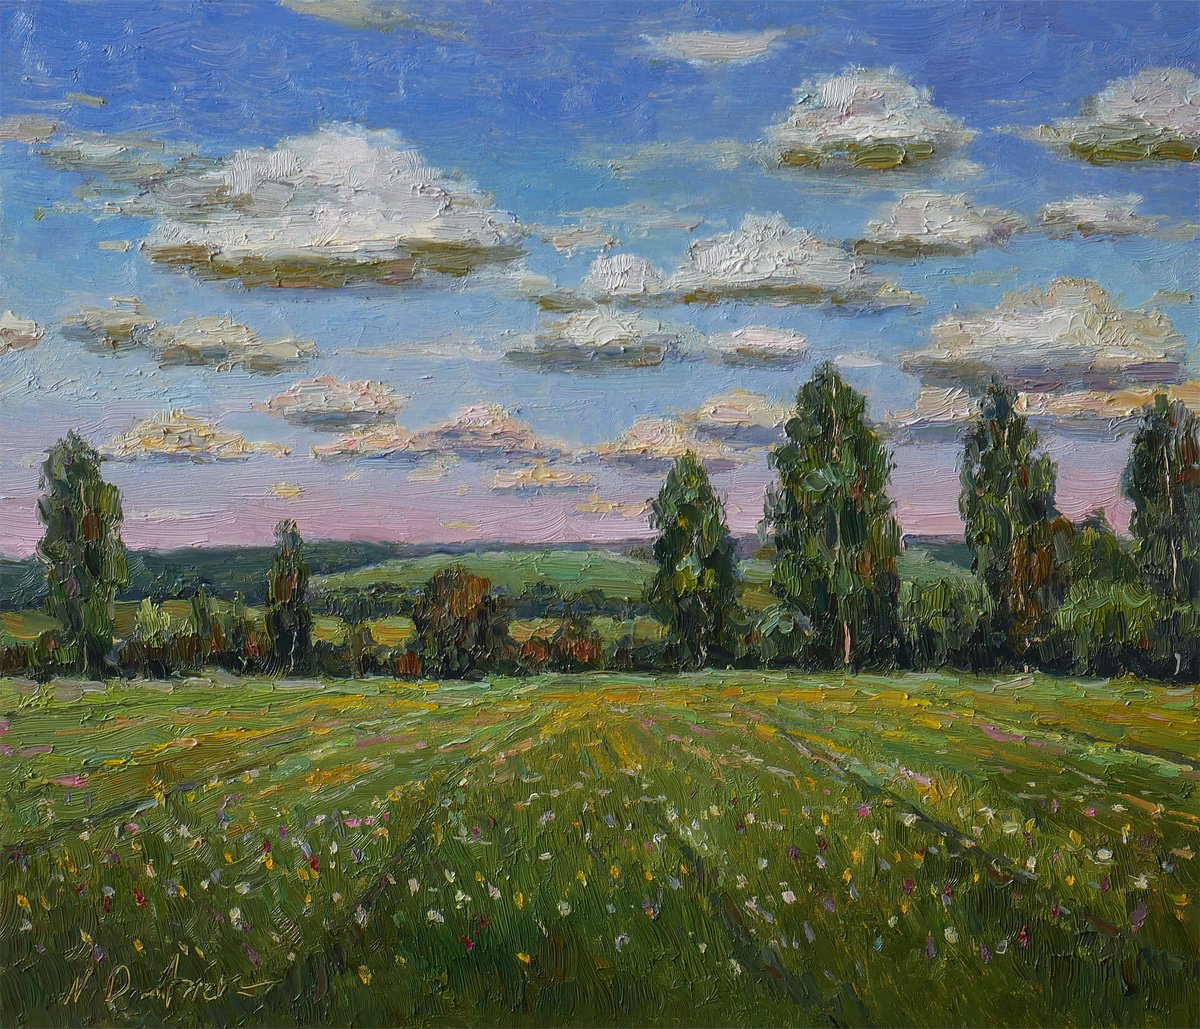 Summer Fields - summer landscape painting by Nikolay Dmitriev